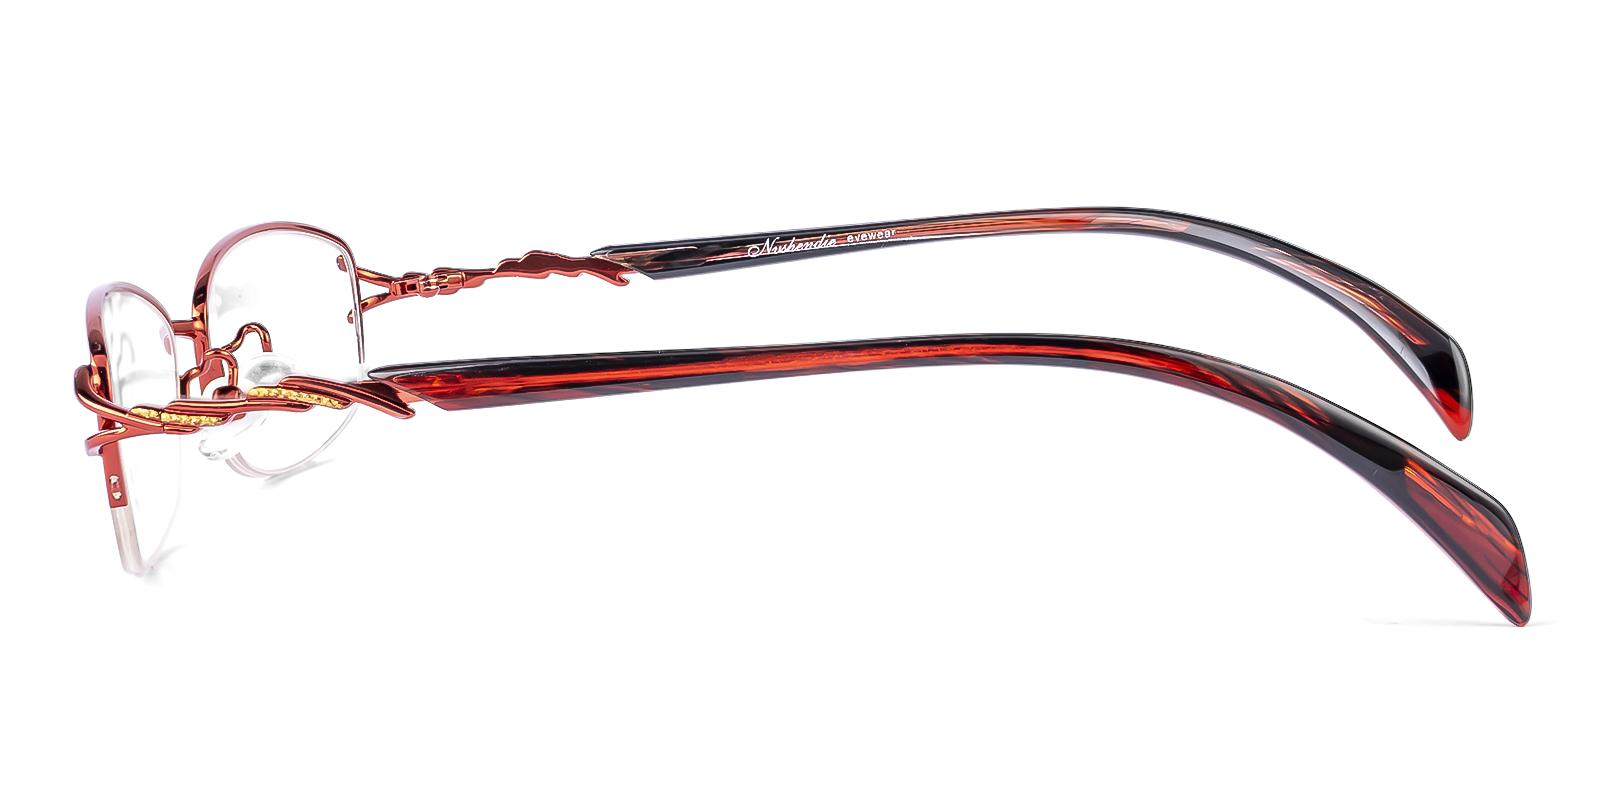 Trplibe Red Metal Eyeglasses , NosePads Frames from ABBE Glasses